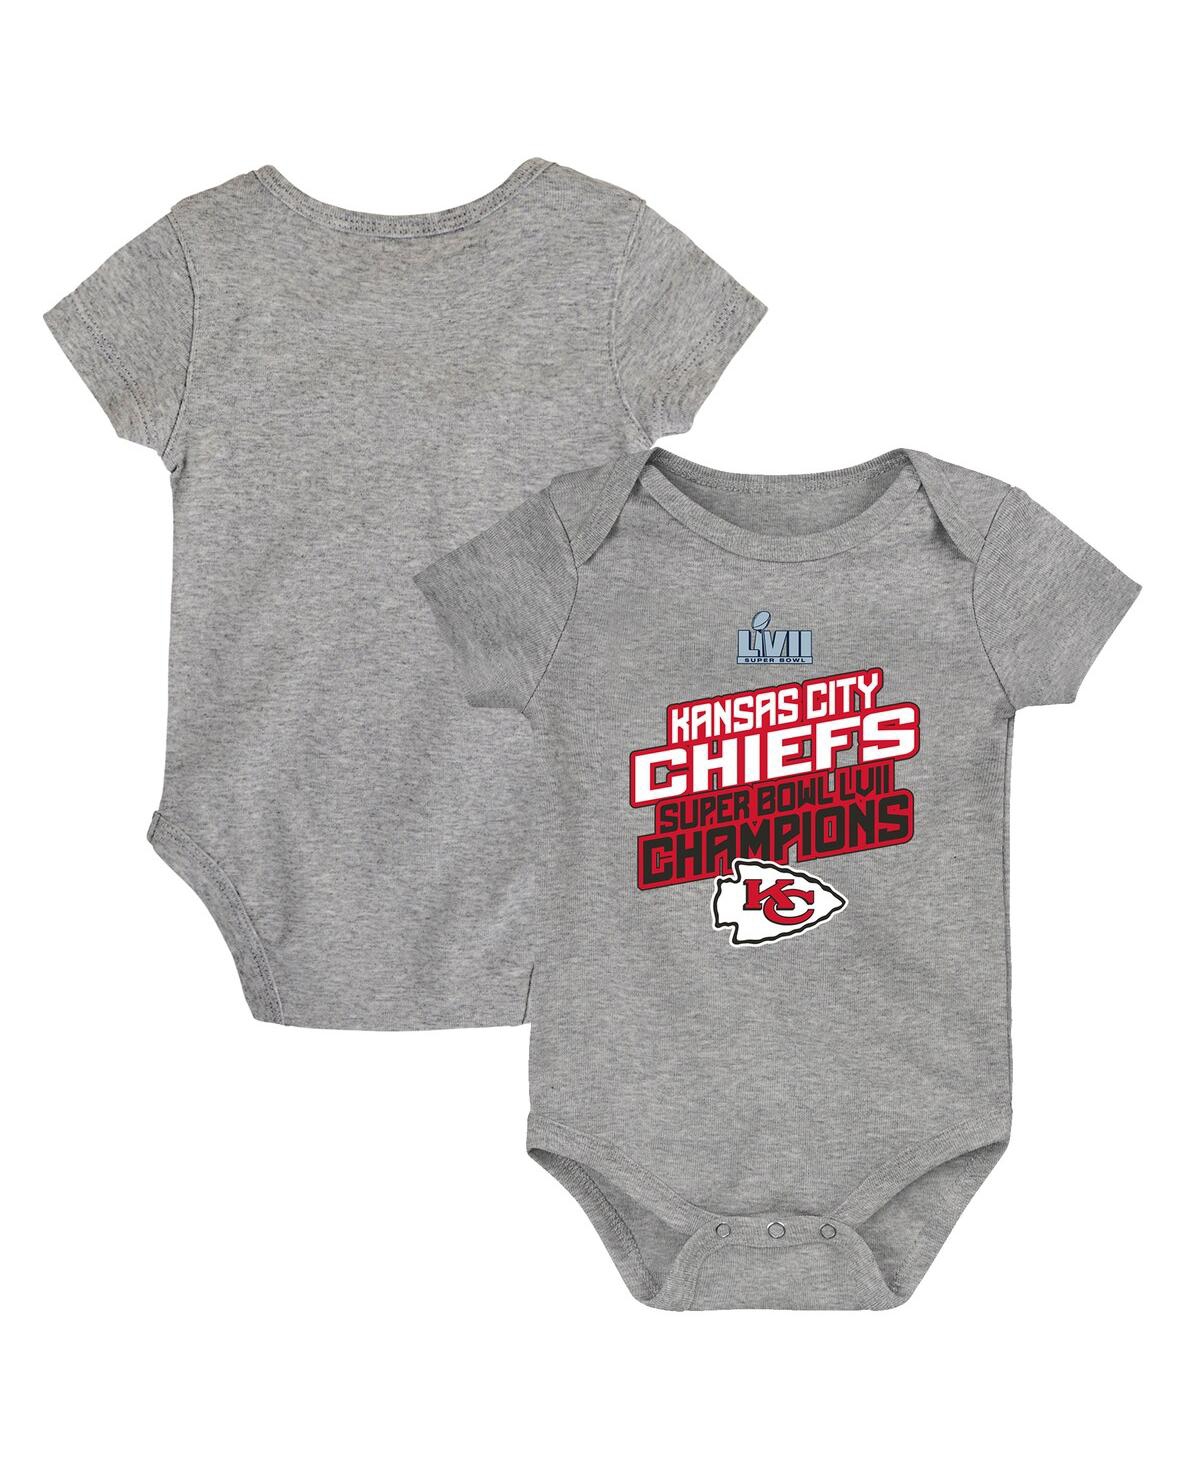 Outerstuff Babies' Infant Boys And Girls Heather Gray Kansas City Chiefs Super Bowl Lvii Champions Lockup Bodysuit